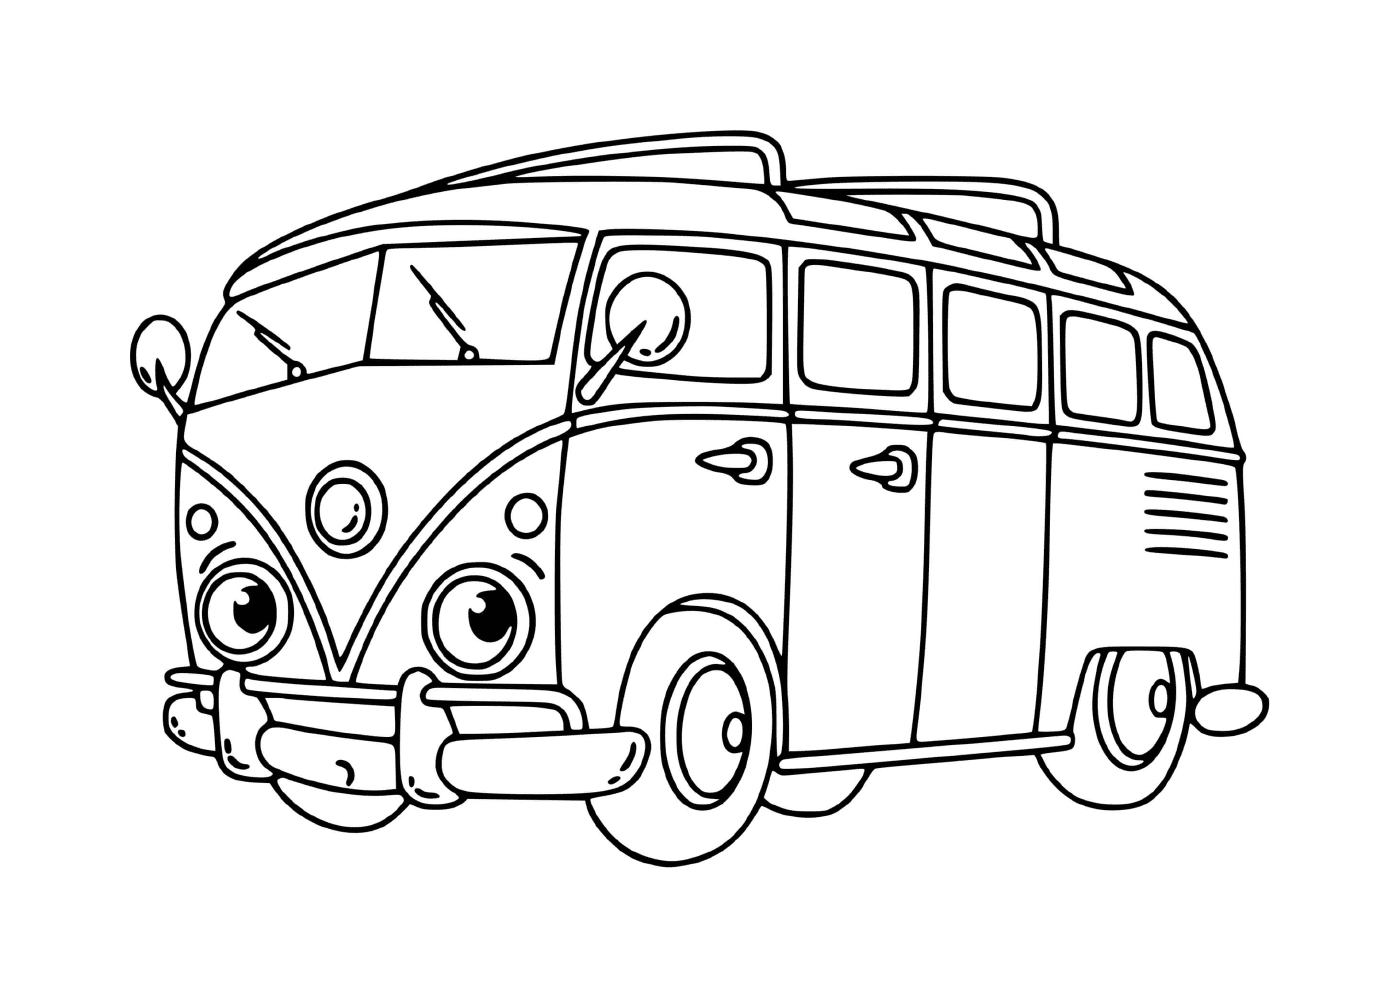  A Volkswagen mini bus 